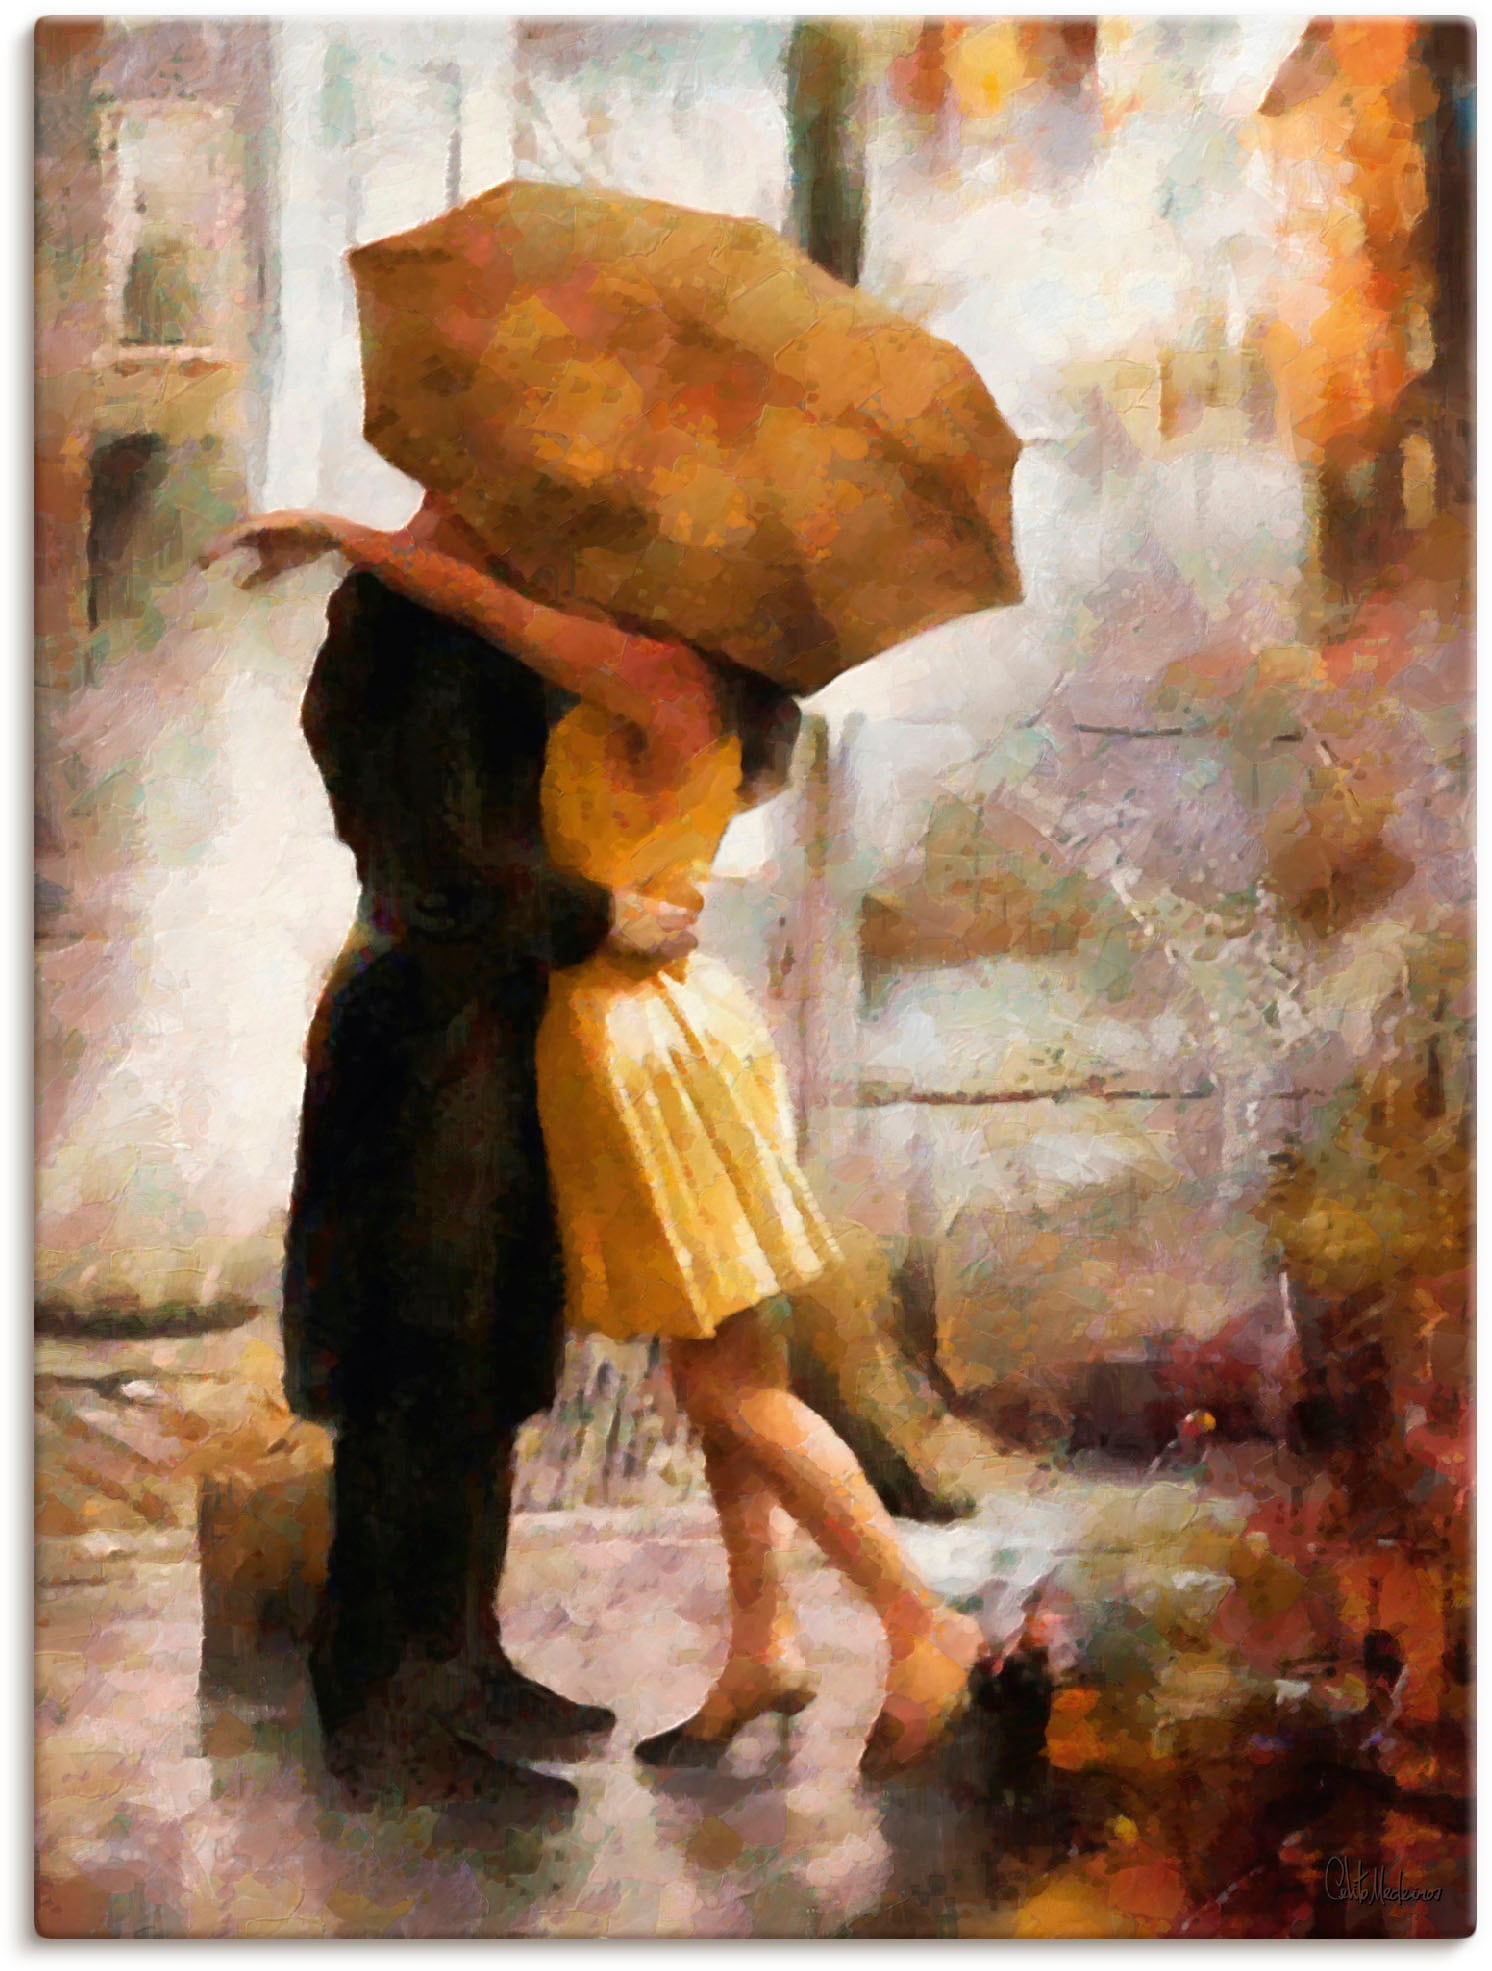 Artland Wandbild »Kuss unter Regenschirm«, Bilder von Liebespaaren, (1 St.), als Leinwandbild, Poster in verschied. Größen